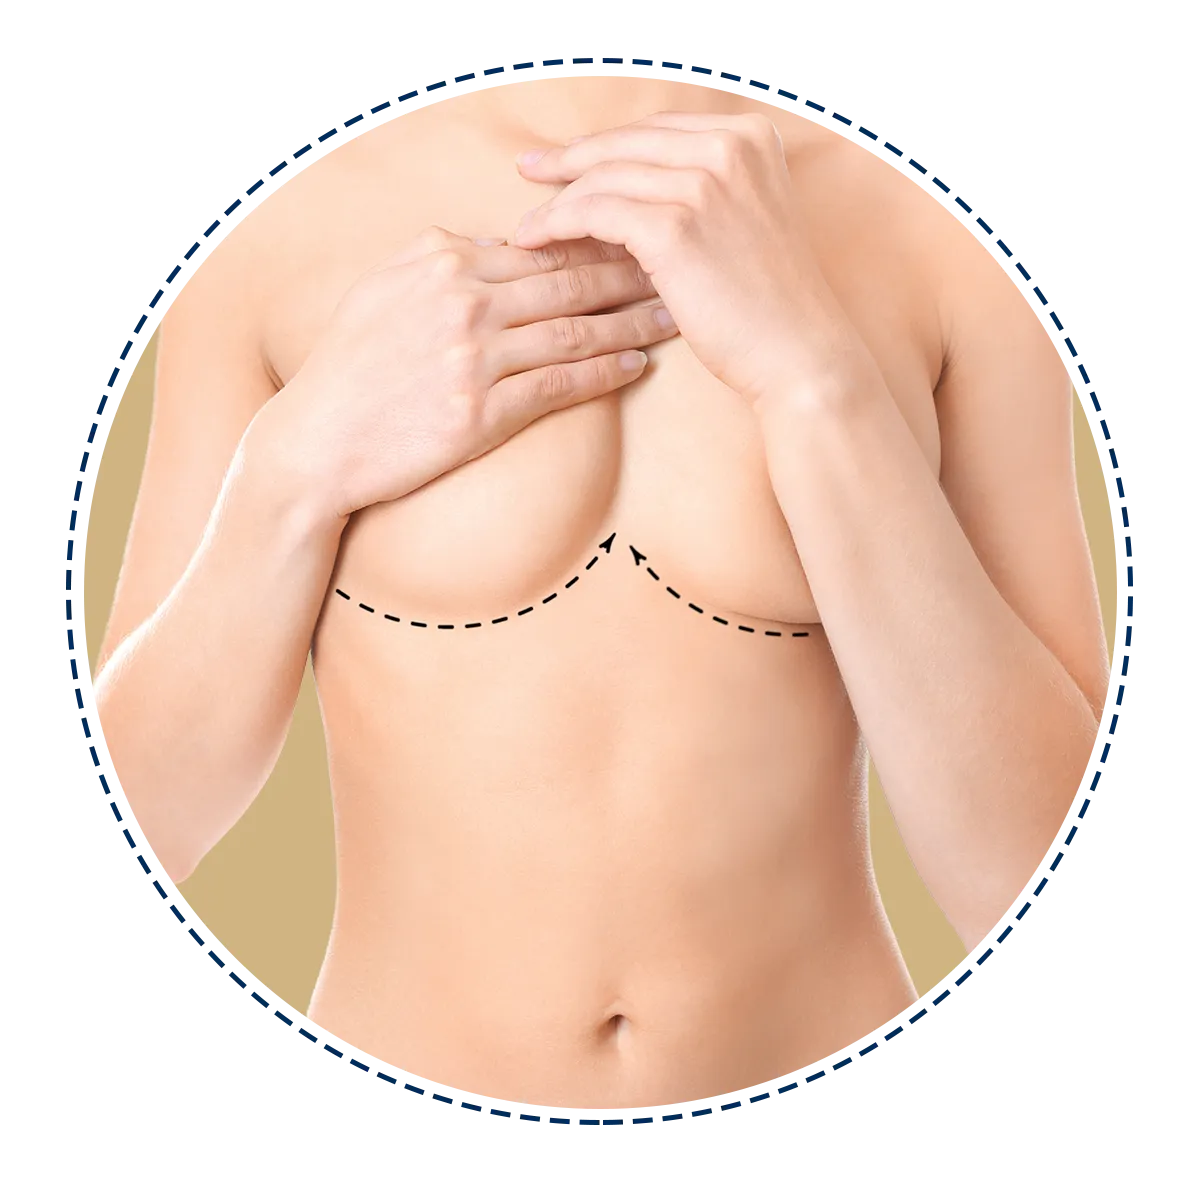 Correcting sagging breasts | Milada Plastic Surgery Hospital 